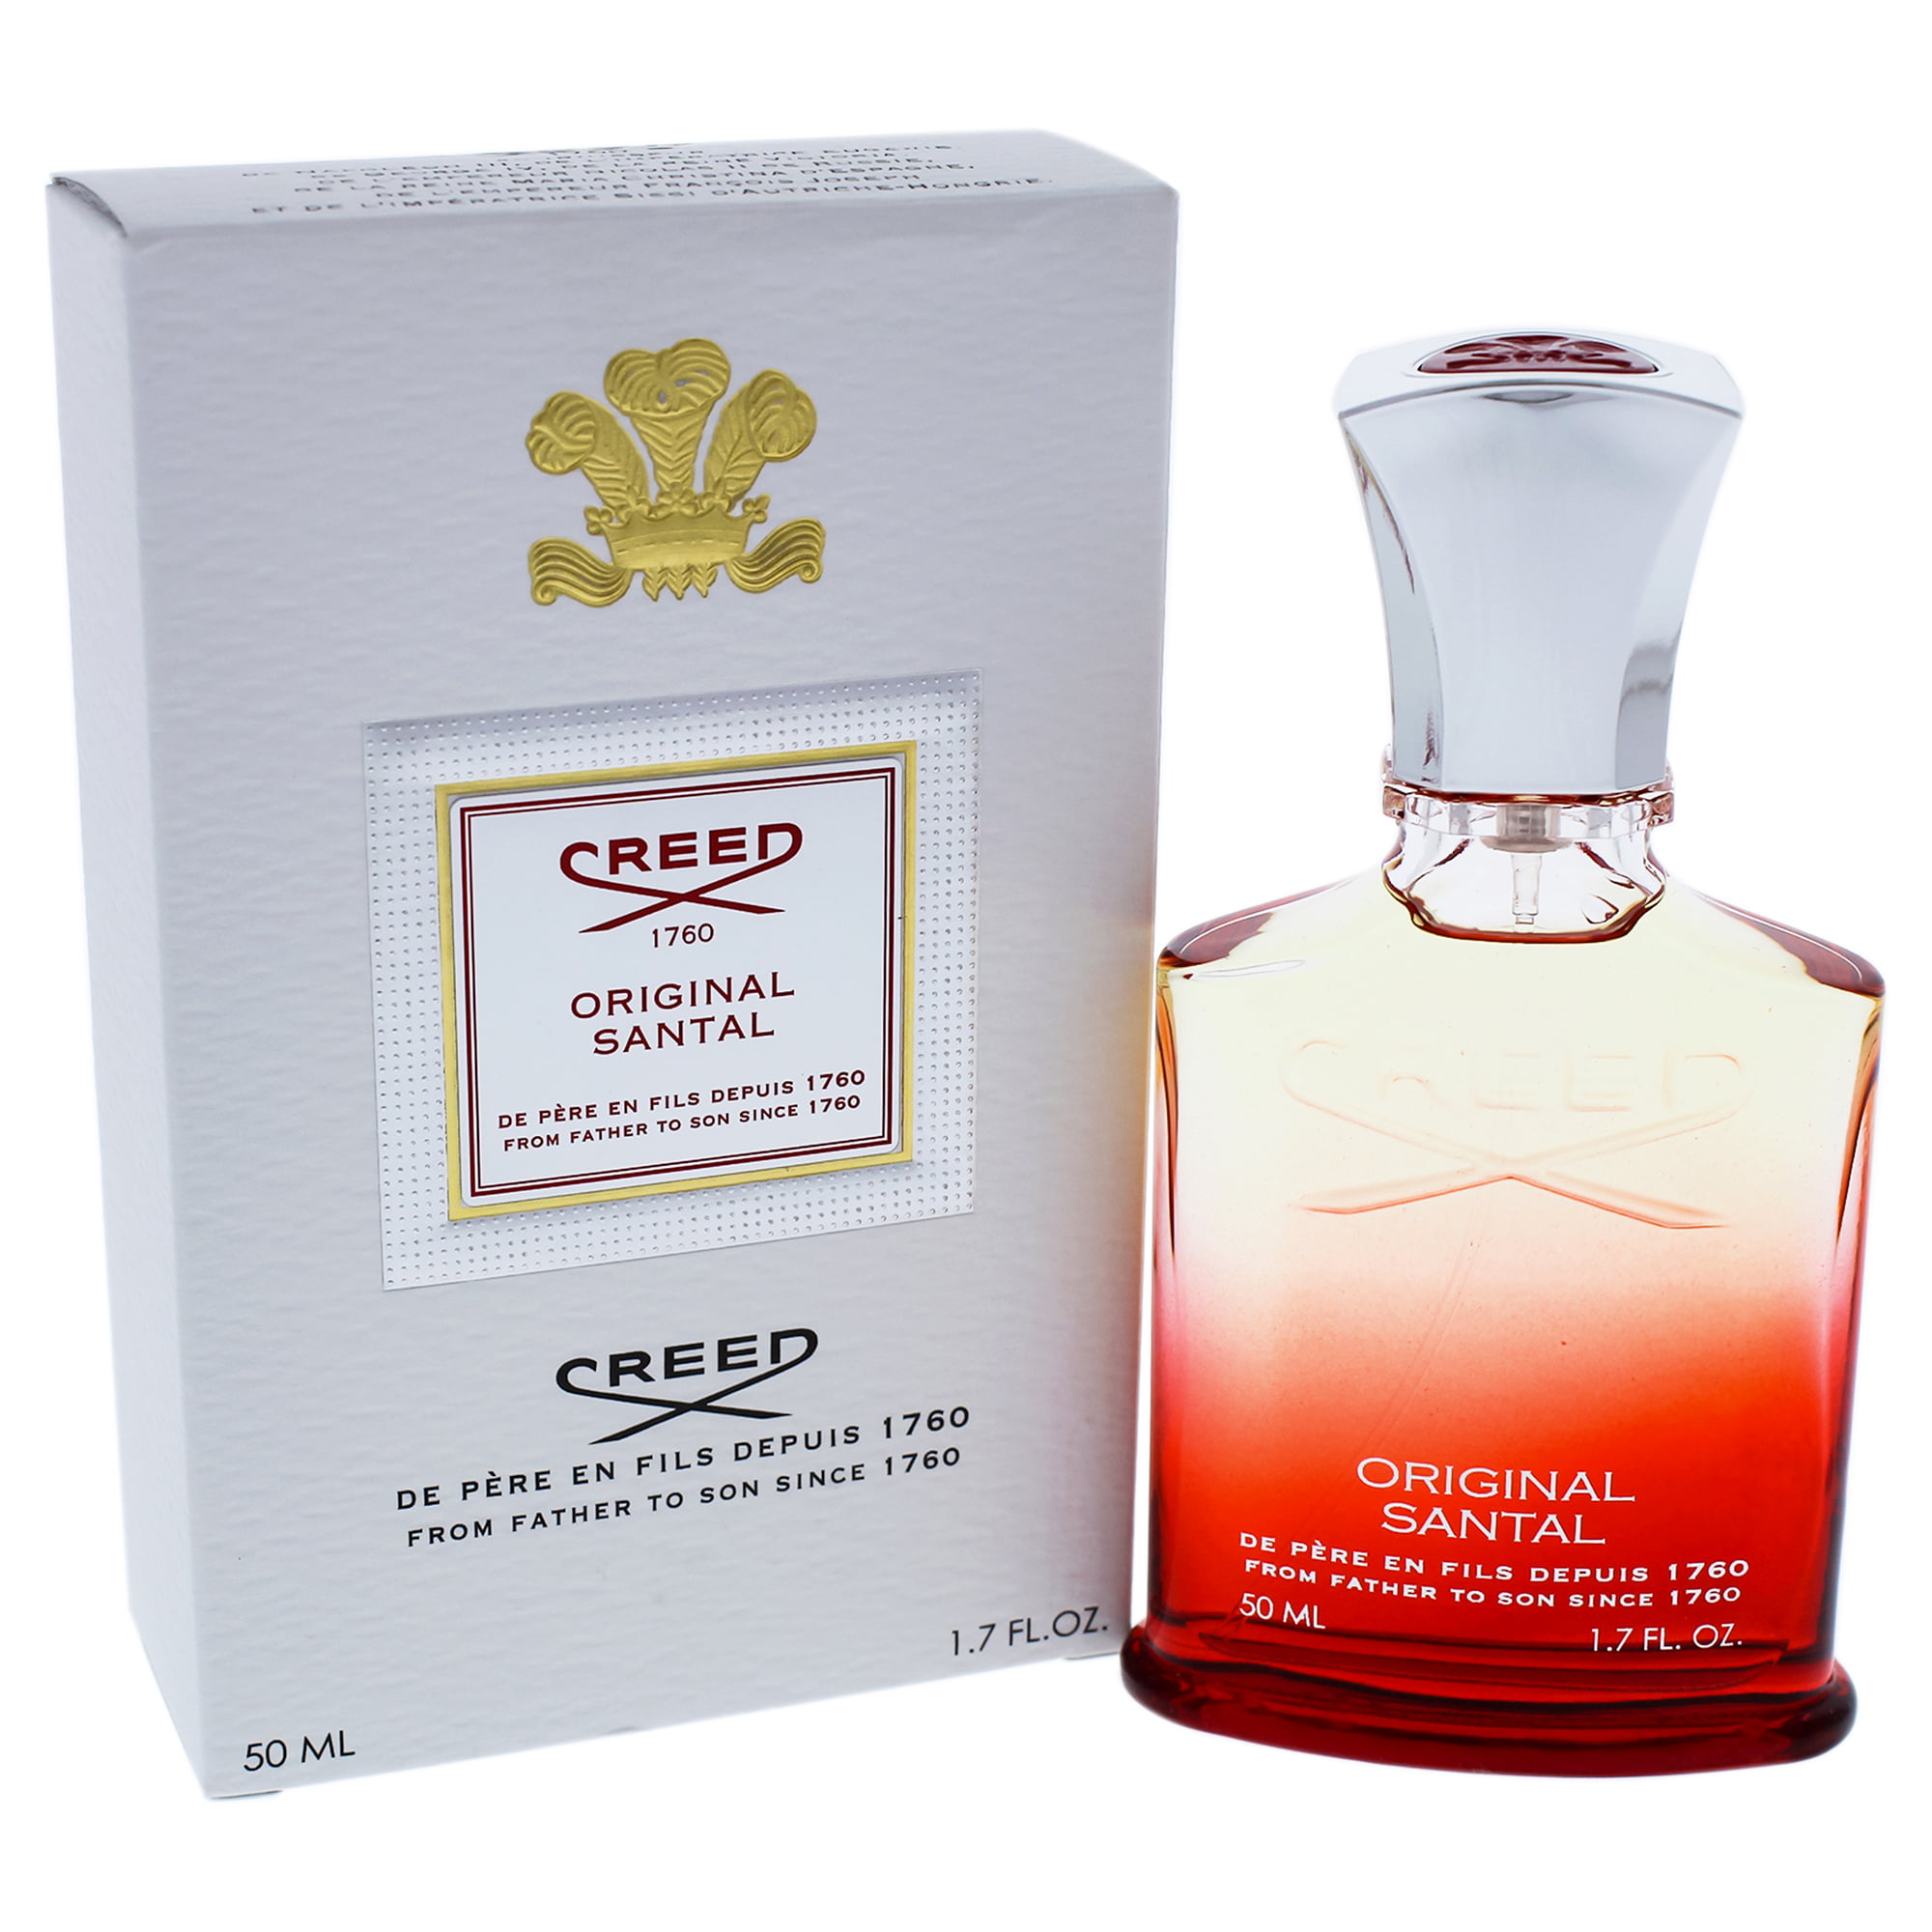 Most popular creed perfume